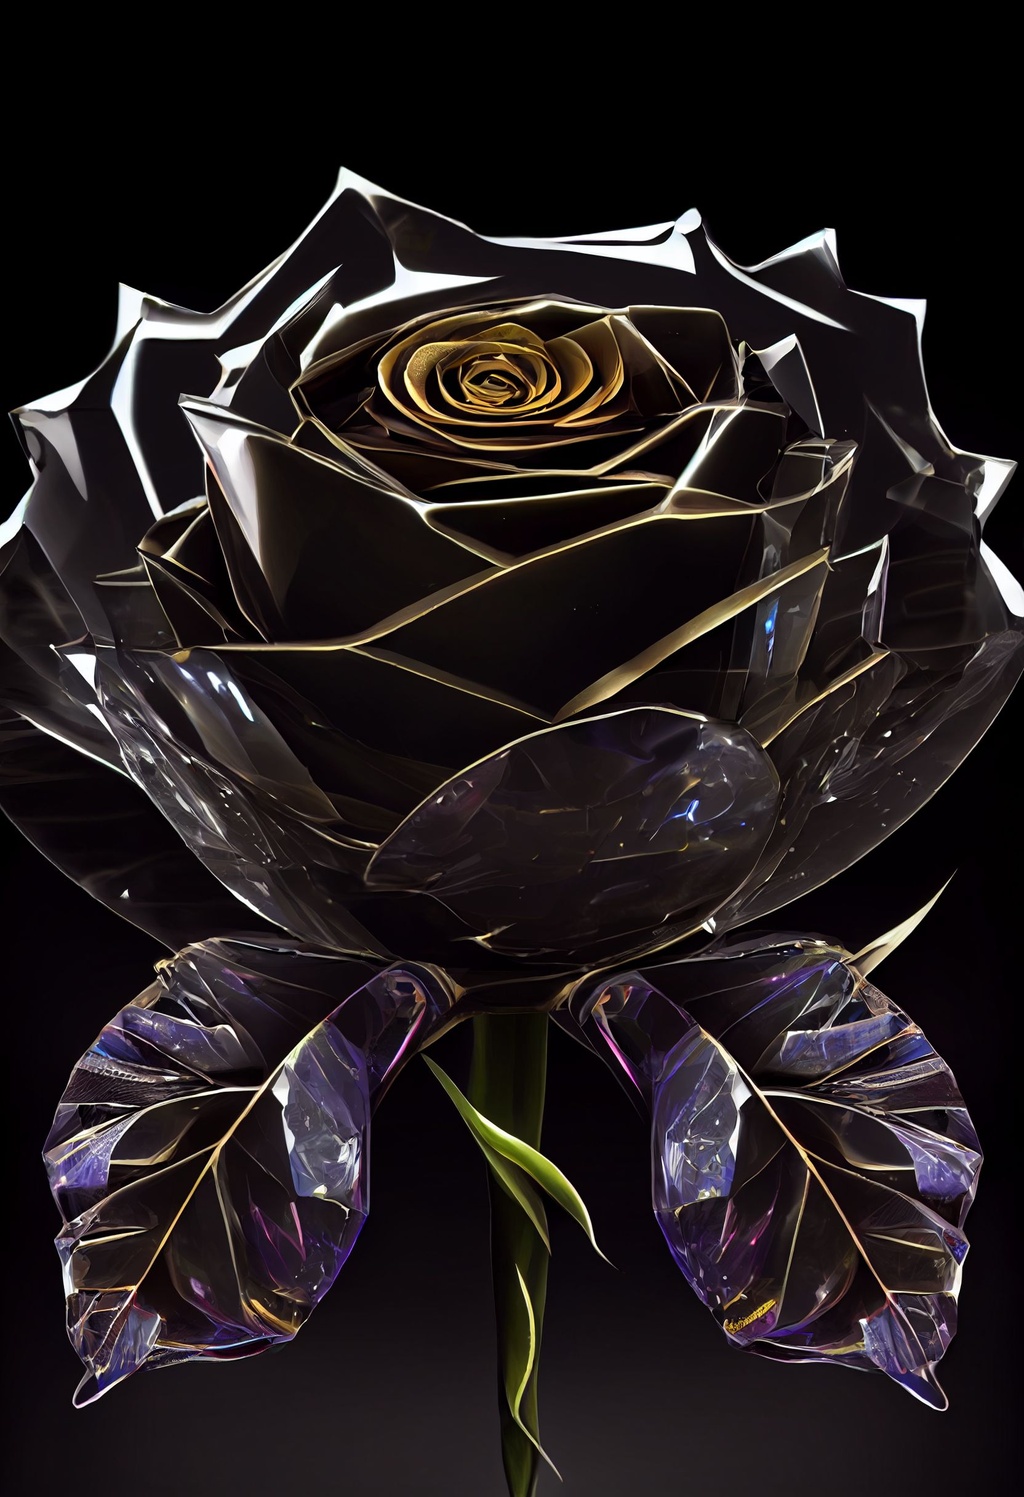 Prompt: Black rose made of brilliantly glittering chrystals, sparkling dew drops, golden stem, dark background, ultra-detailed, high resolution, rendering